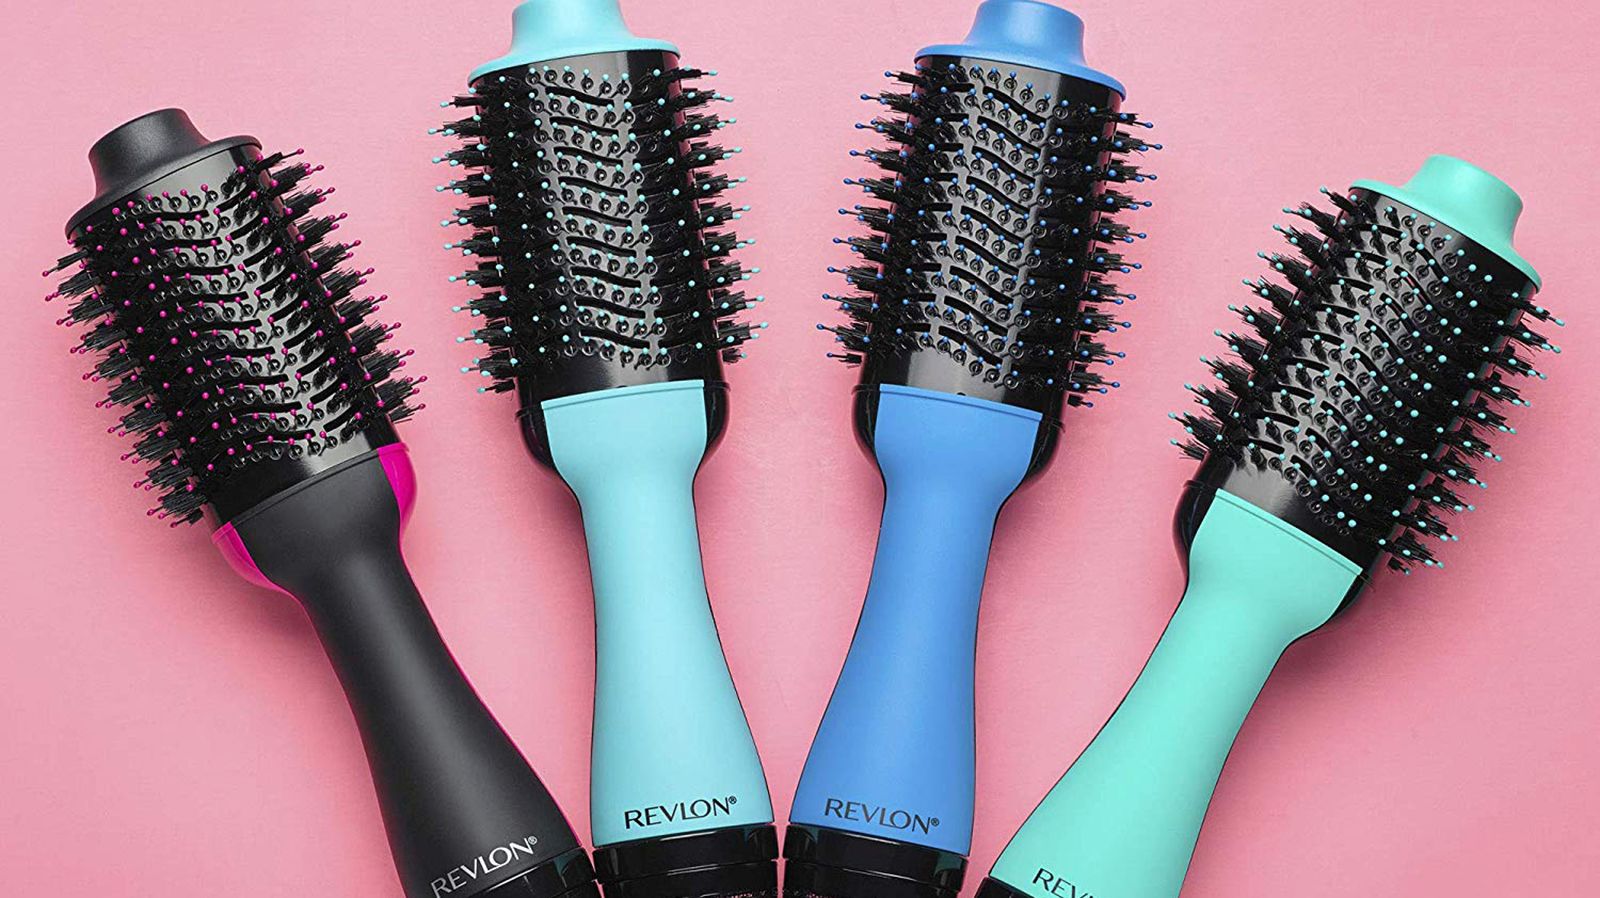 Revlon One-Step sale: Save on a top hair dryer | CNN Underscored